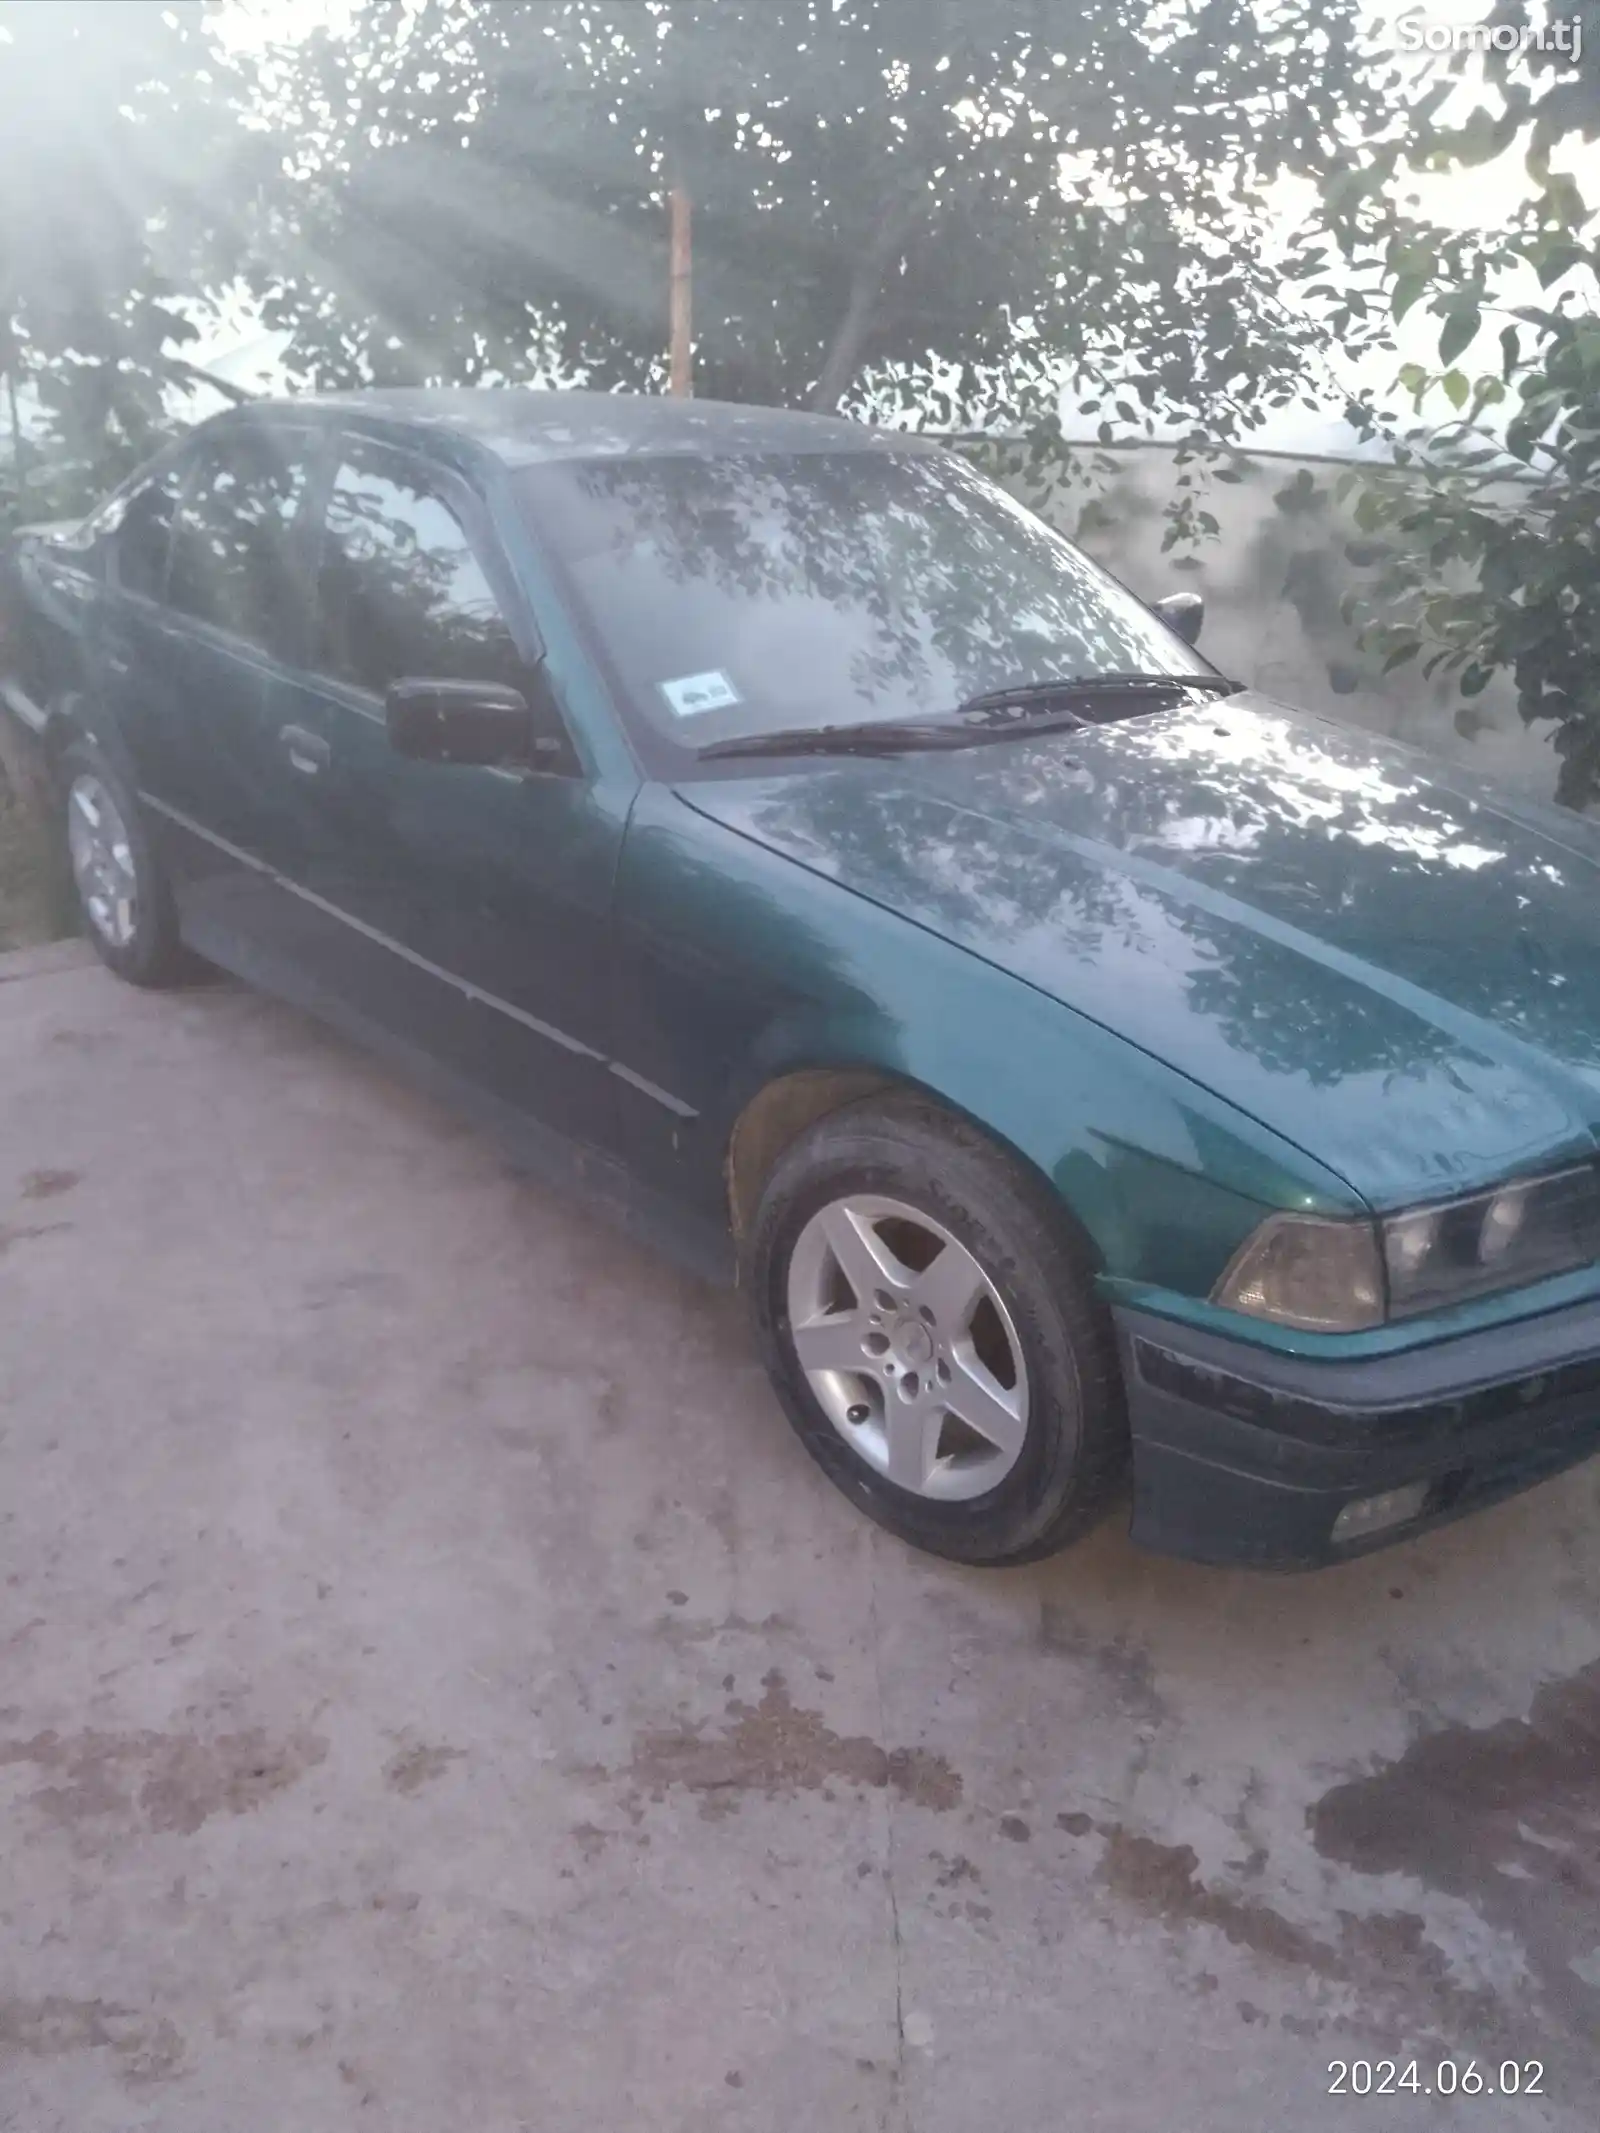 BMW 3 series, 1993-1